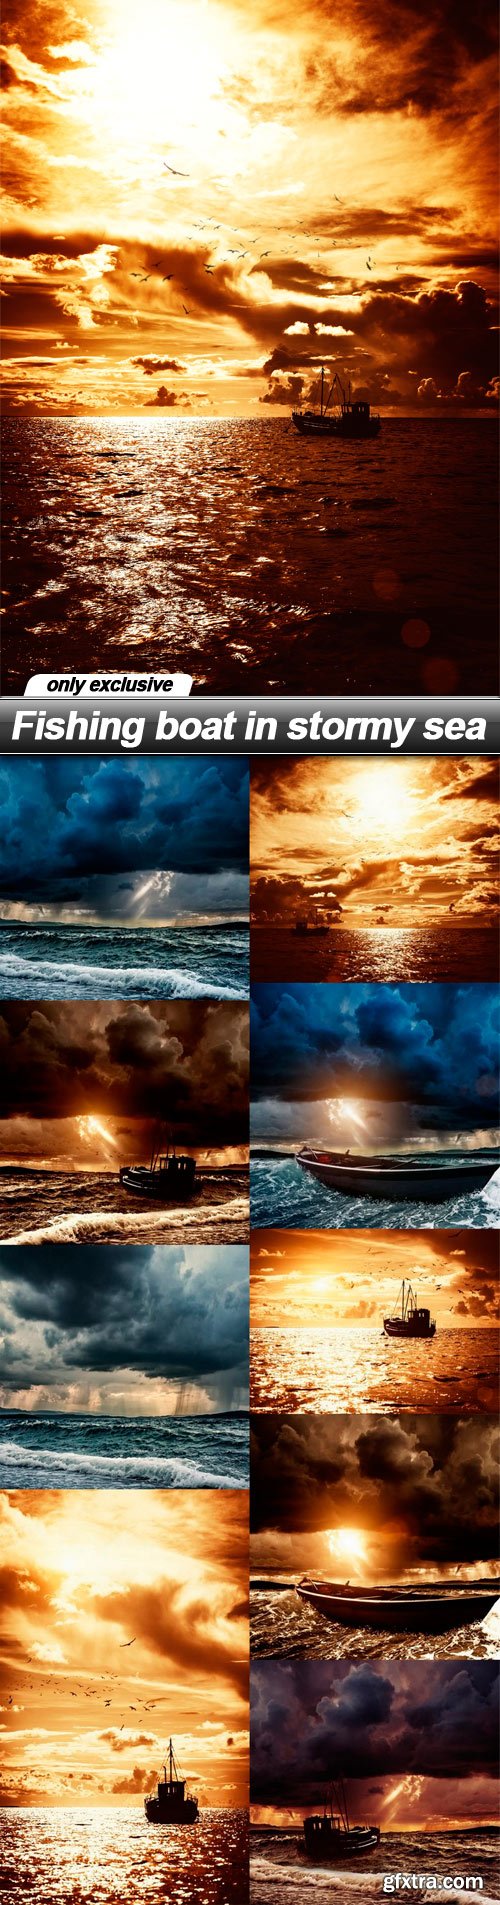 Fishing boat in stormy sea - 10 UHQ JPEG